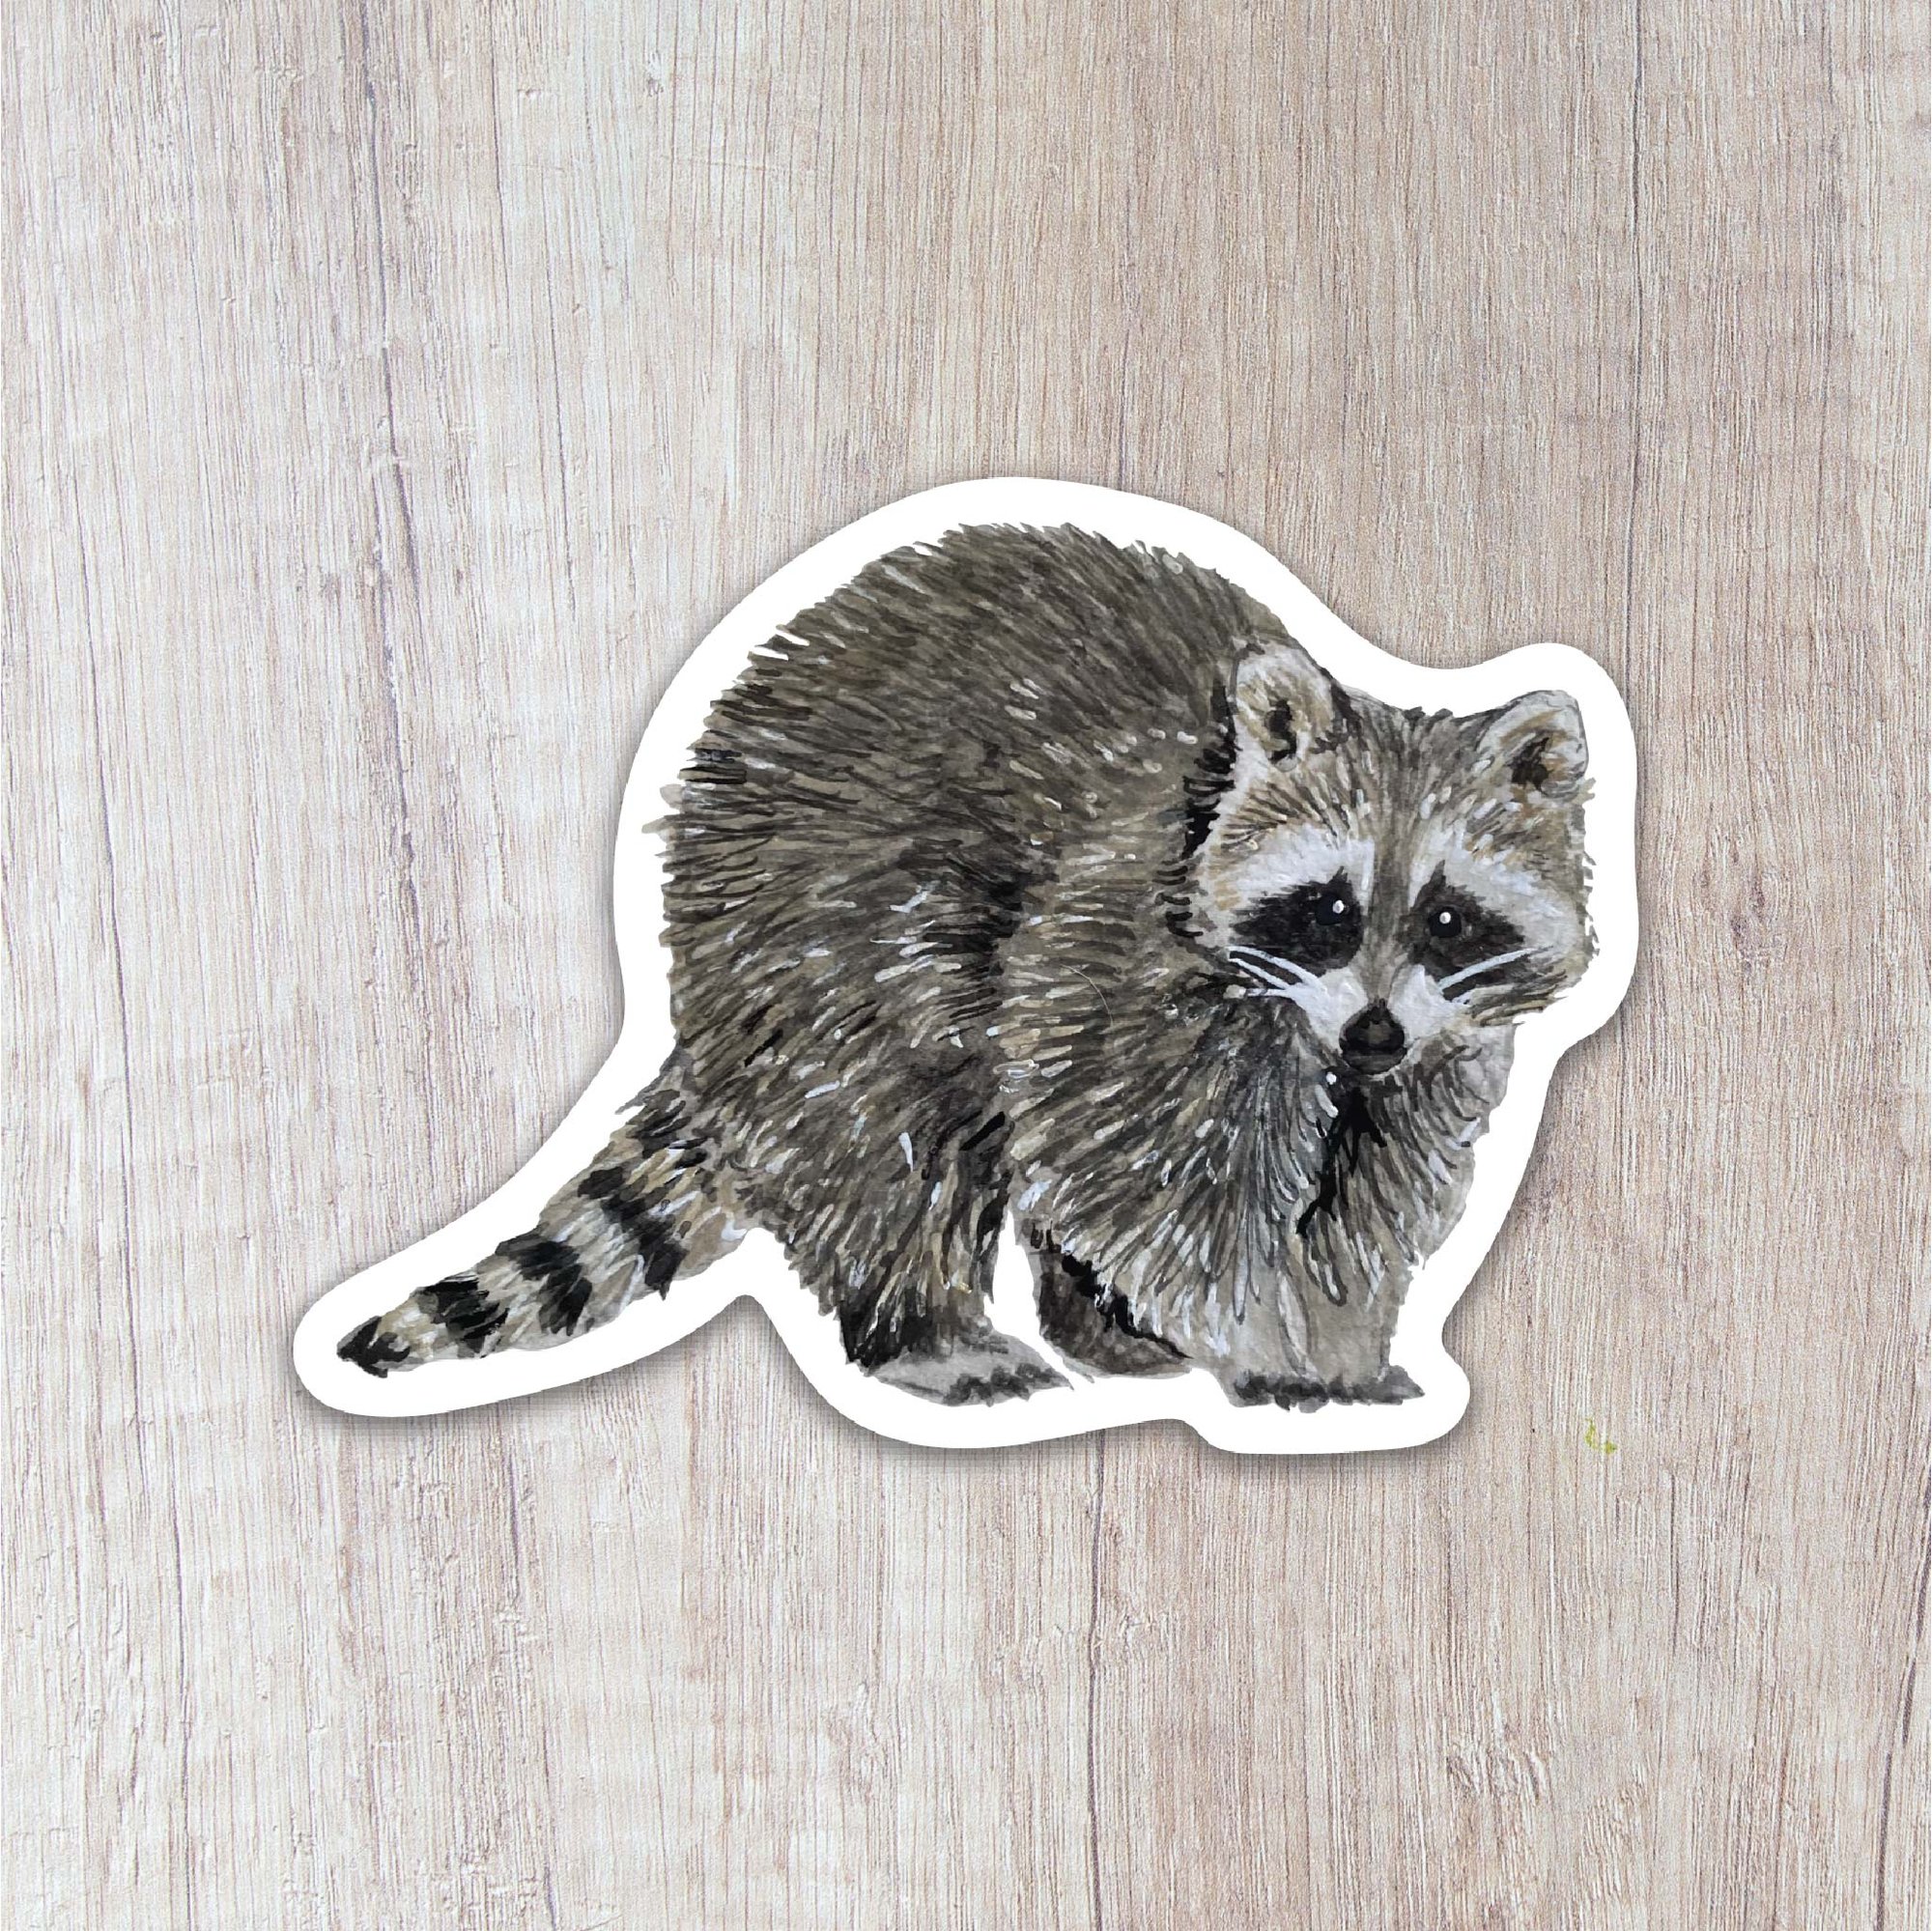 Stickers Cute Animal Raccoon, Stickers Decals Raccoon